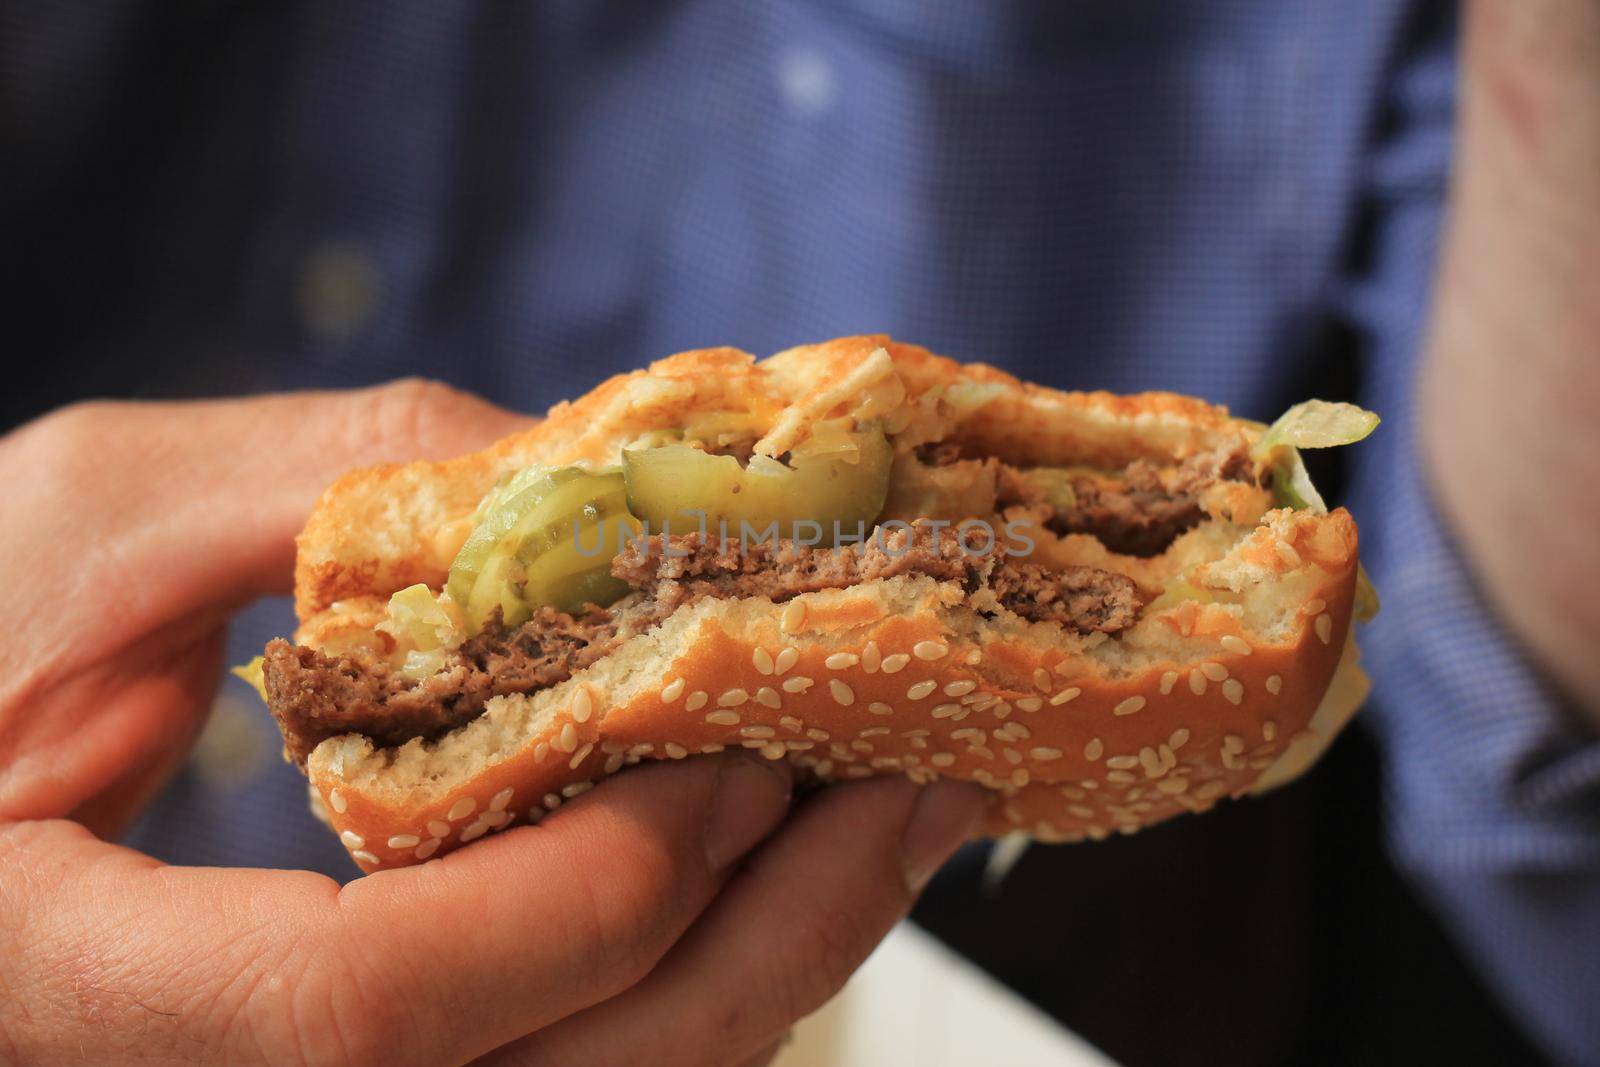 Man holding a fresh made hamburger by studioportosabbia